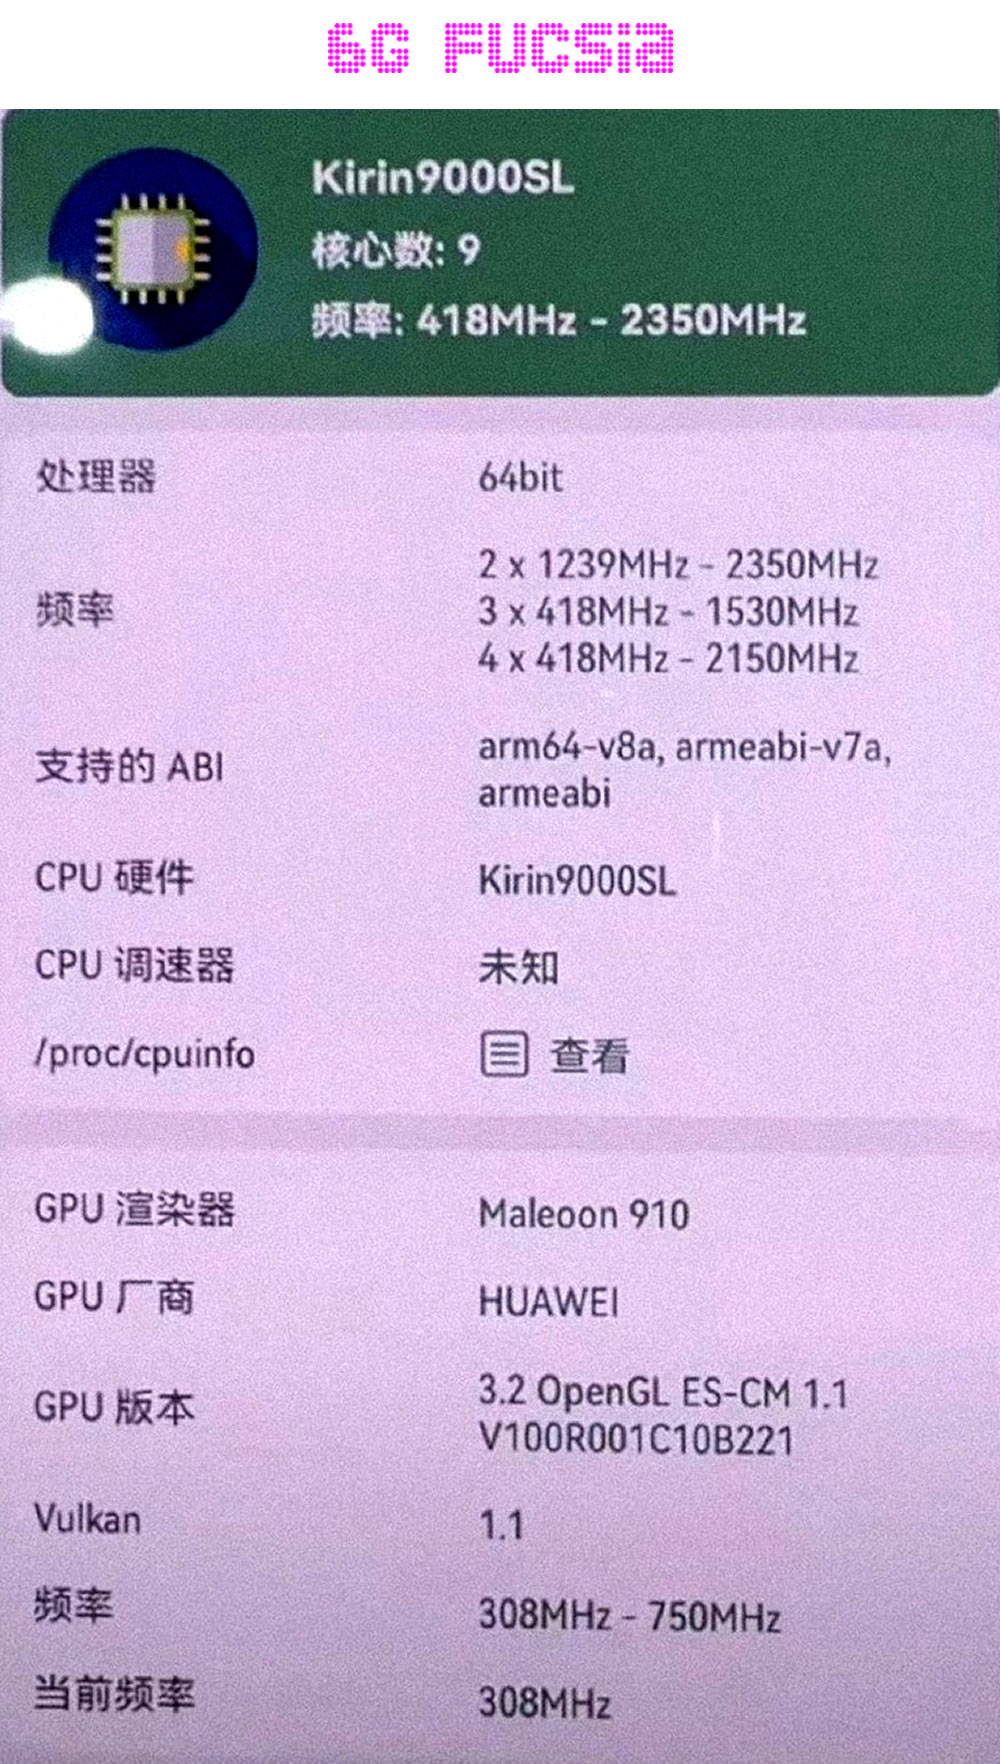 6G Fucsia – Ya viene el procesador Huawei Kirin 9000SL